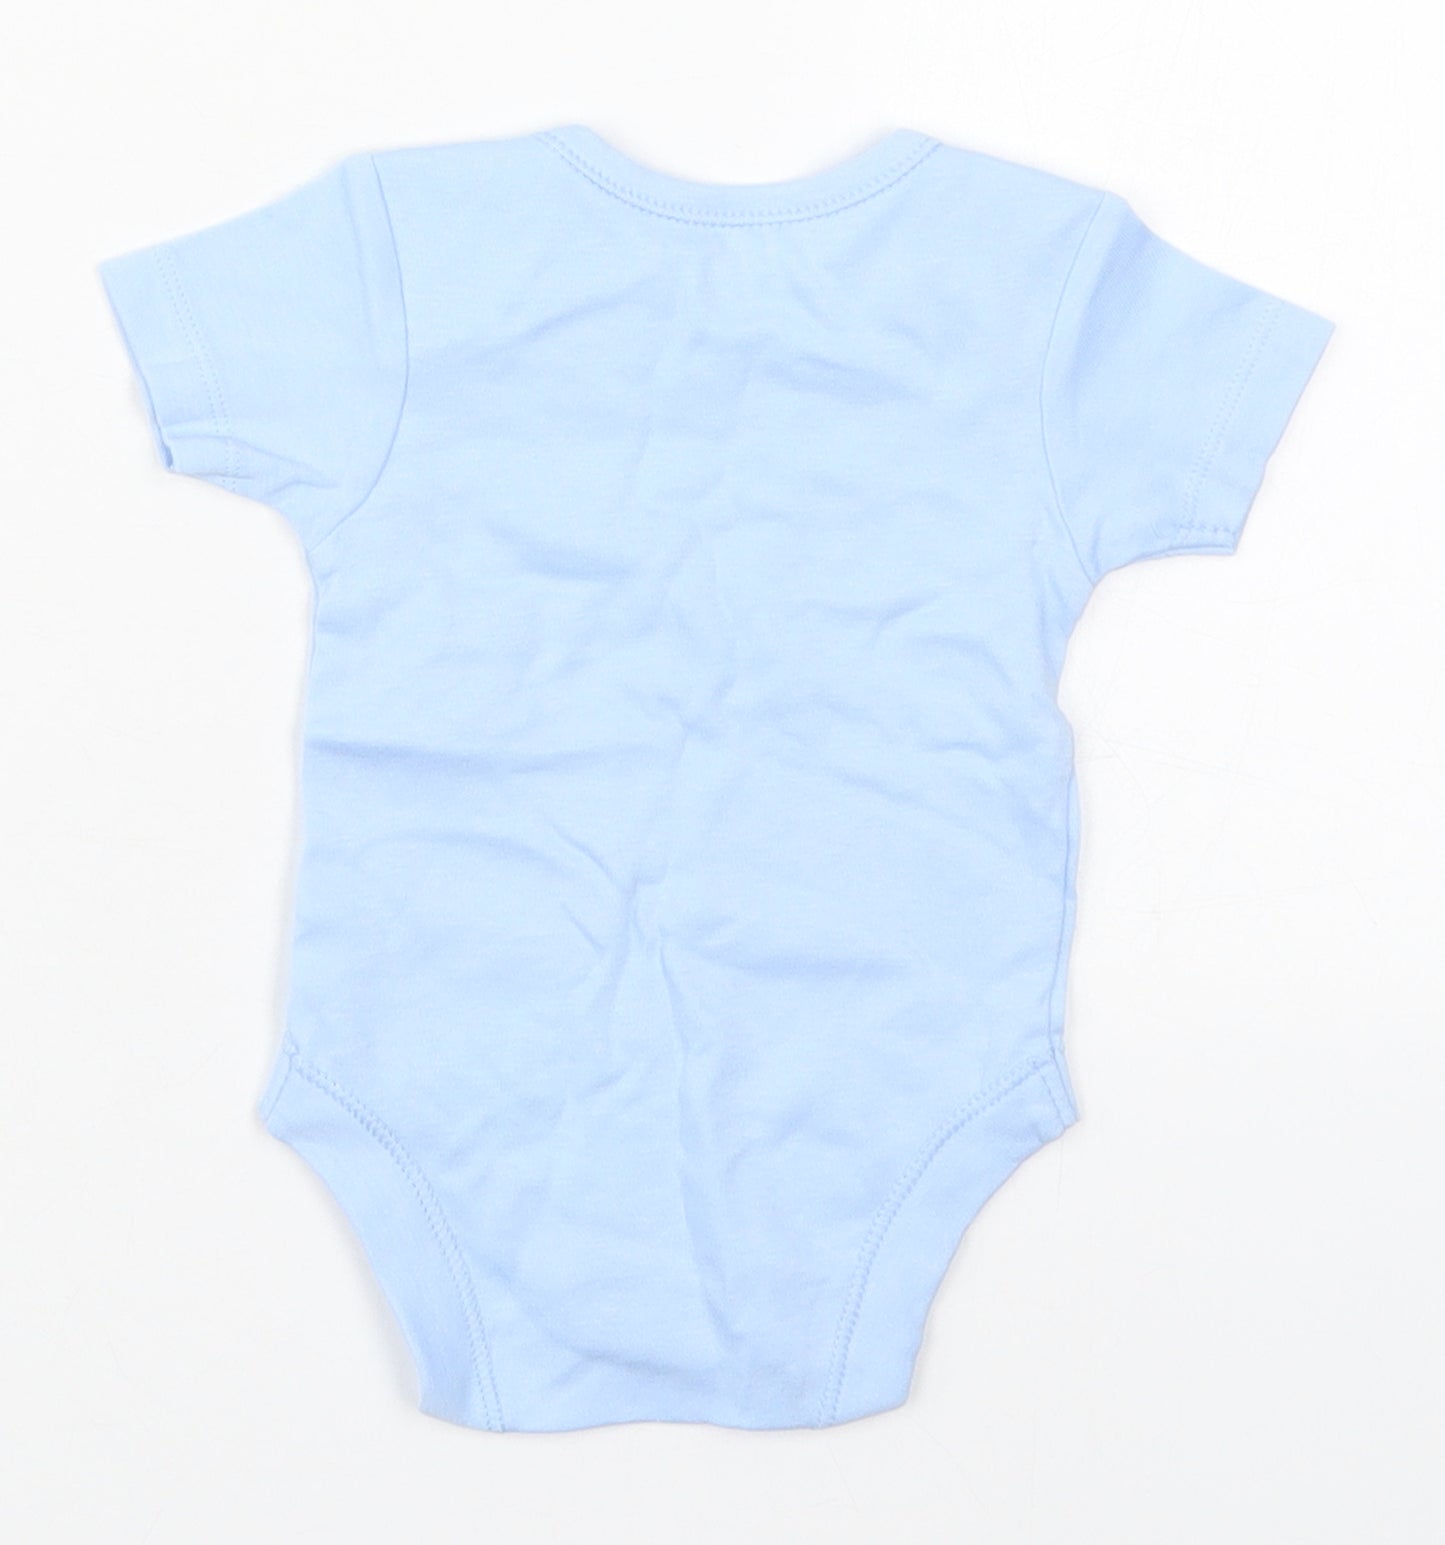 George Boys Blue  Cotton Babygrow One-Piece Size 0-3 Months  Button - Cwtch Me